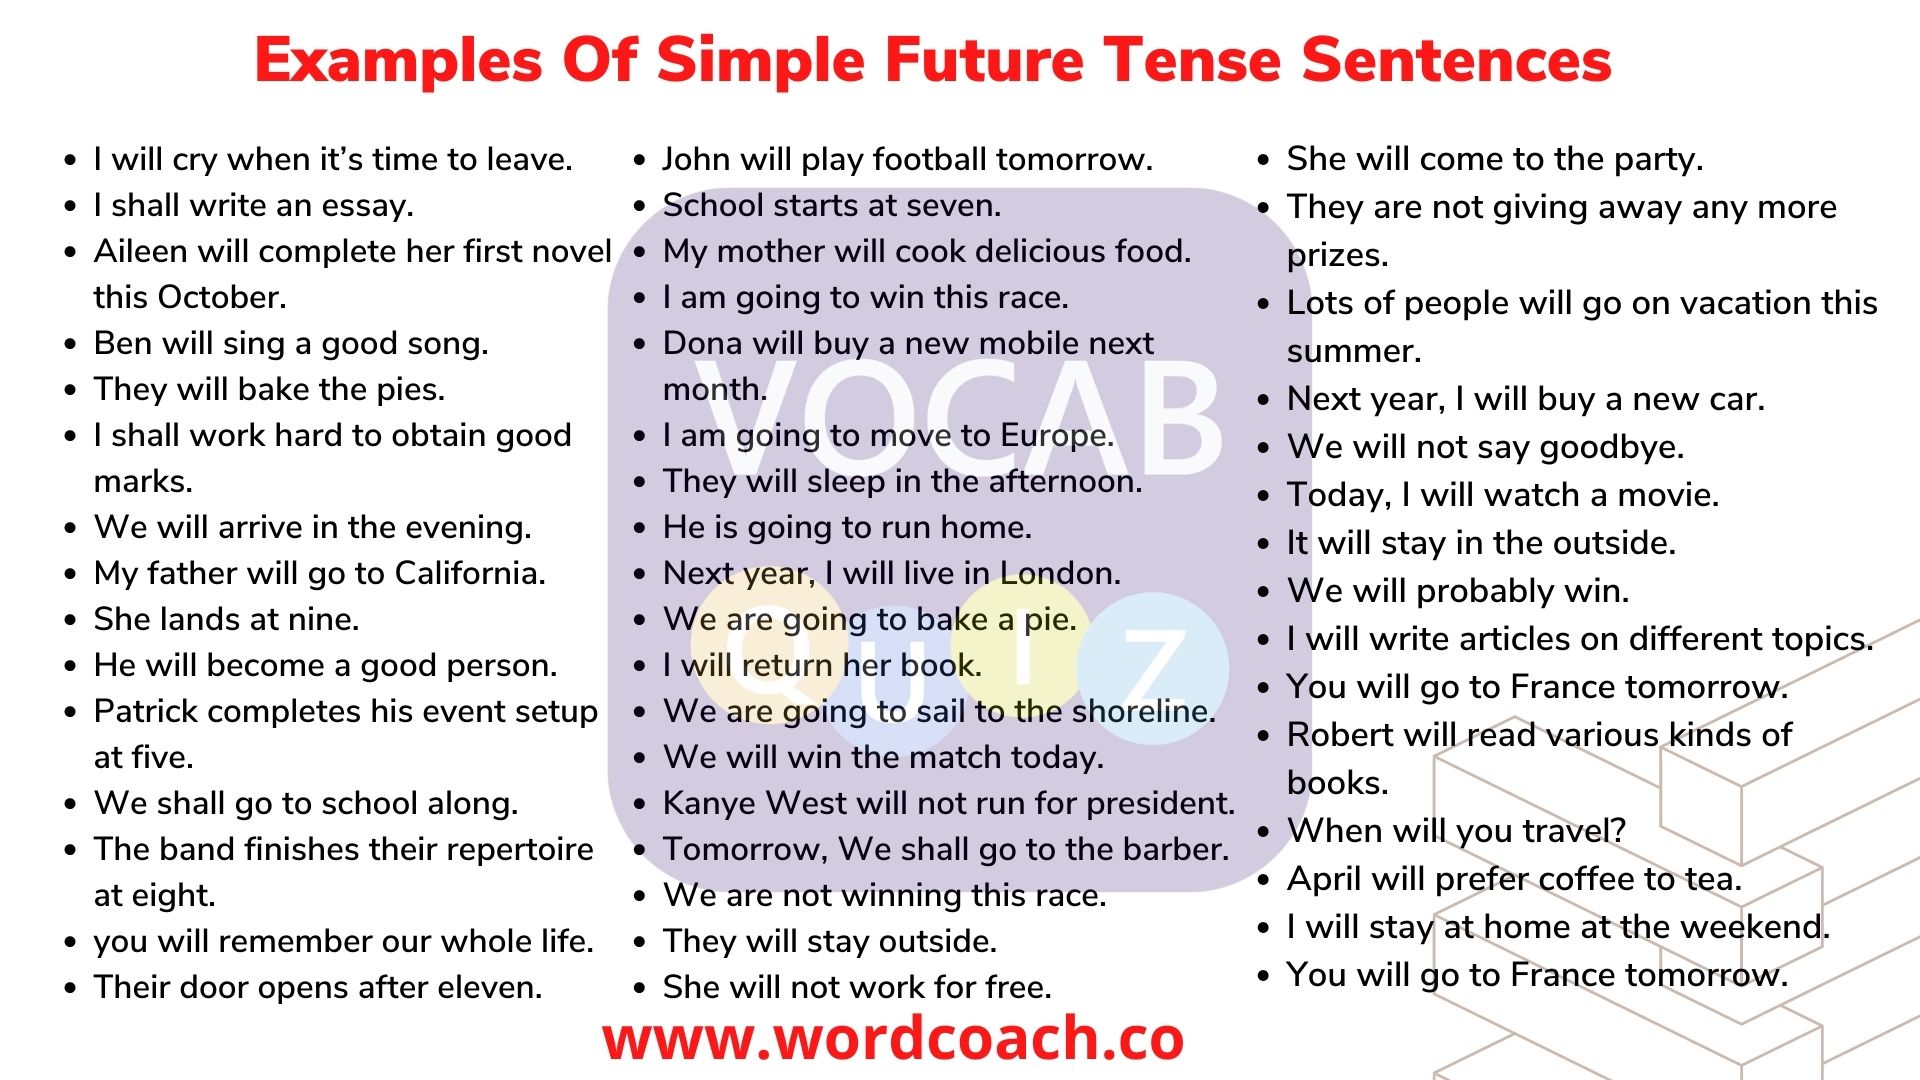 Examples Of Simple Future Tense Sentences